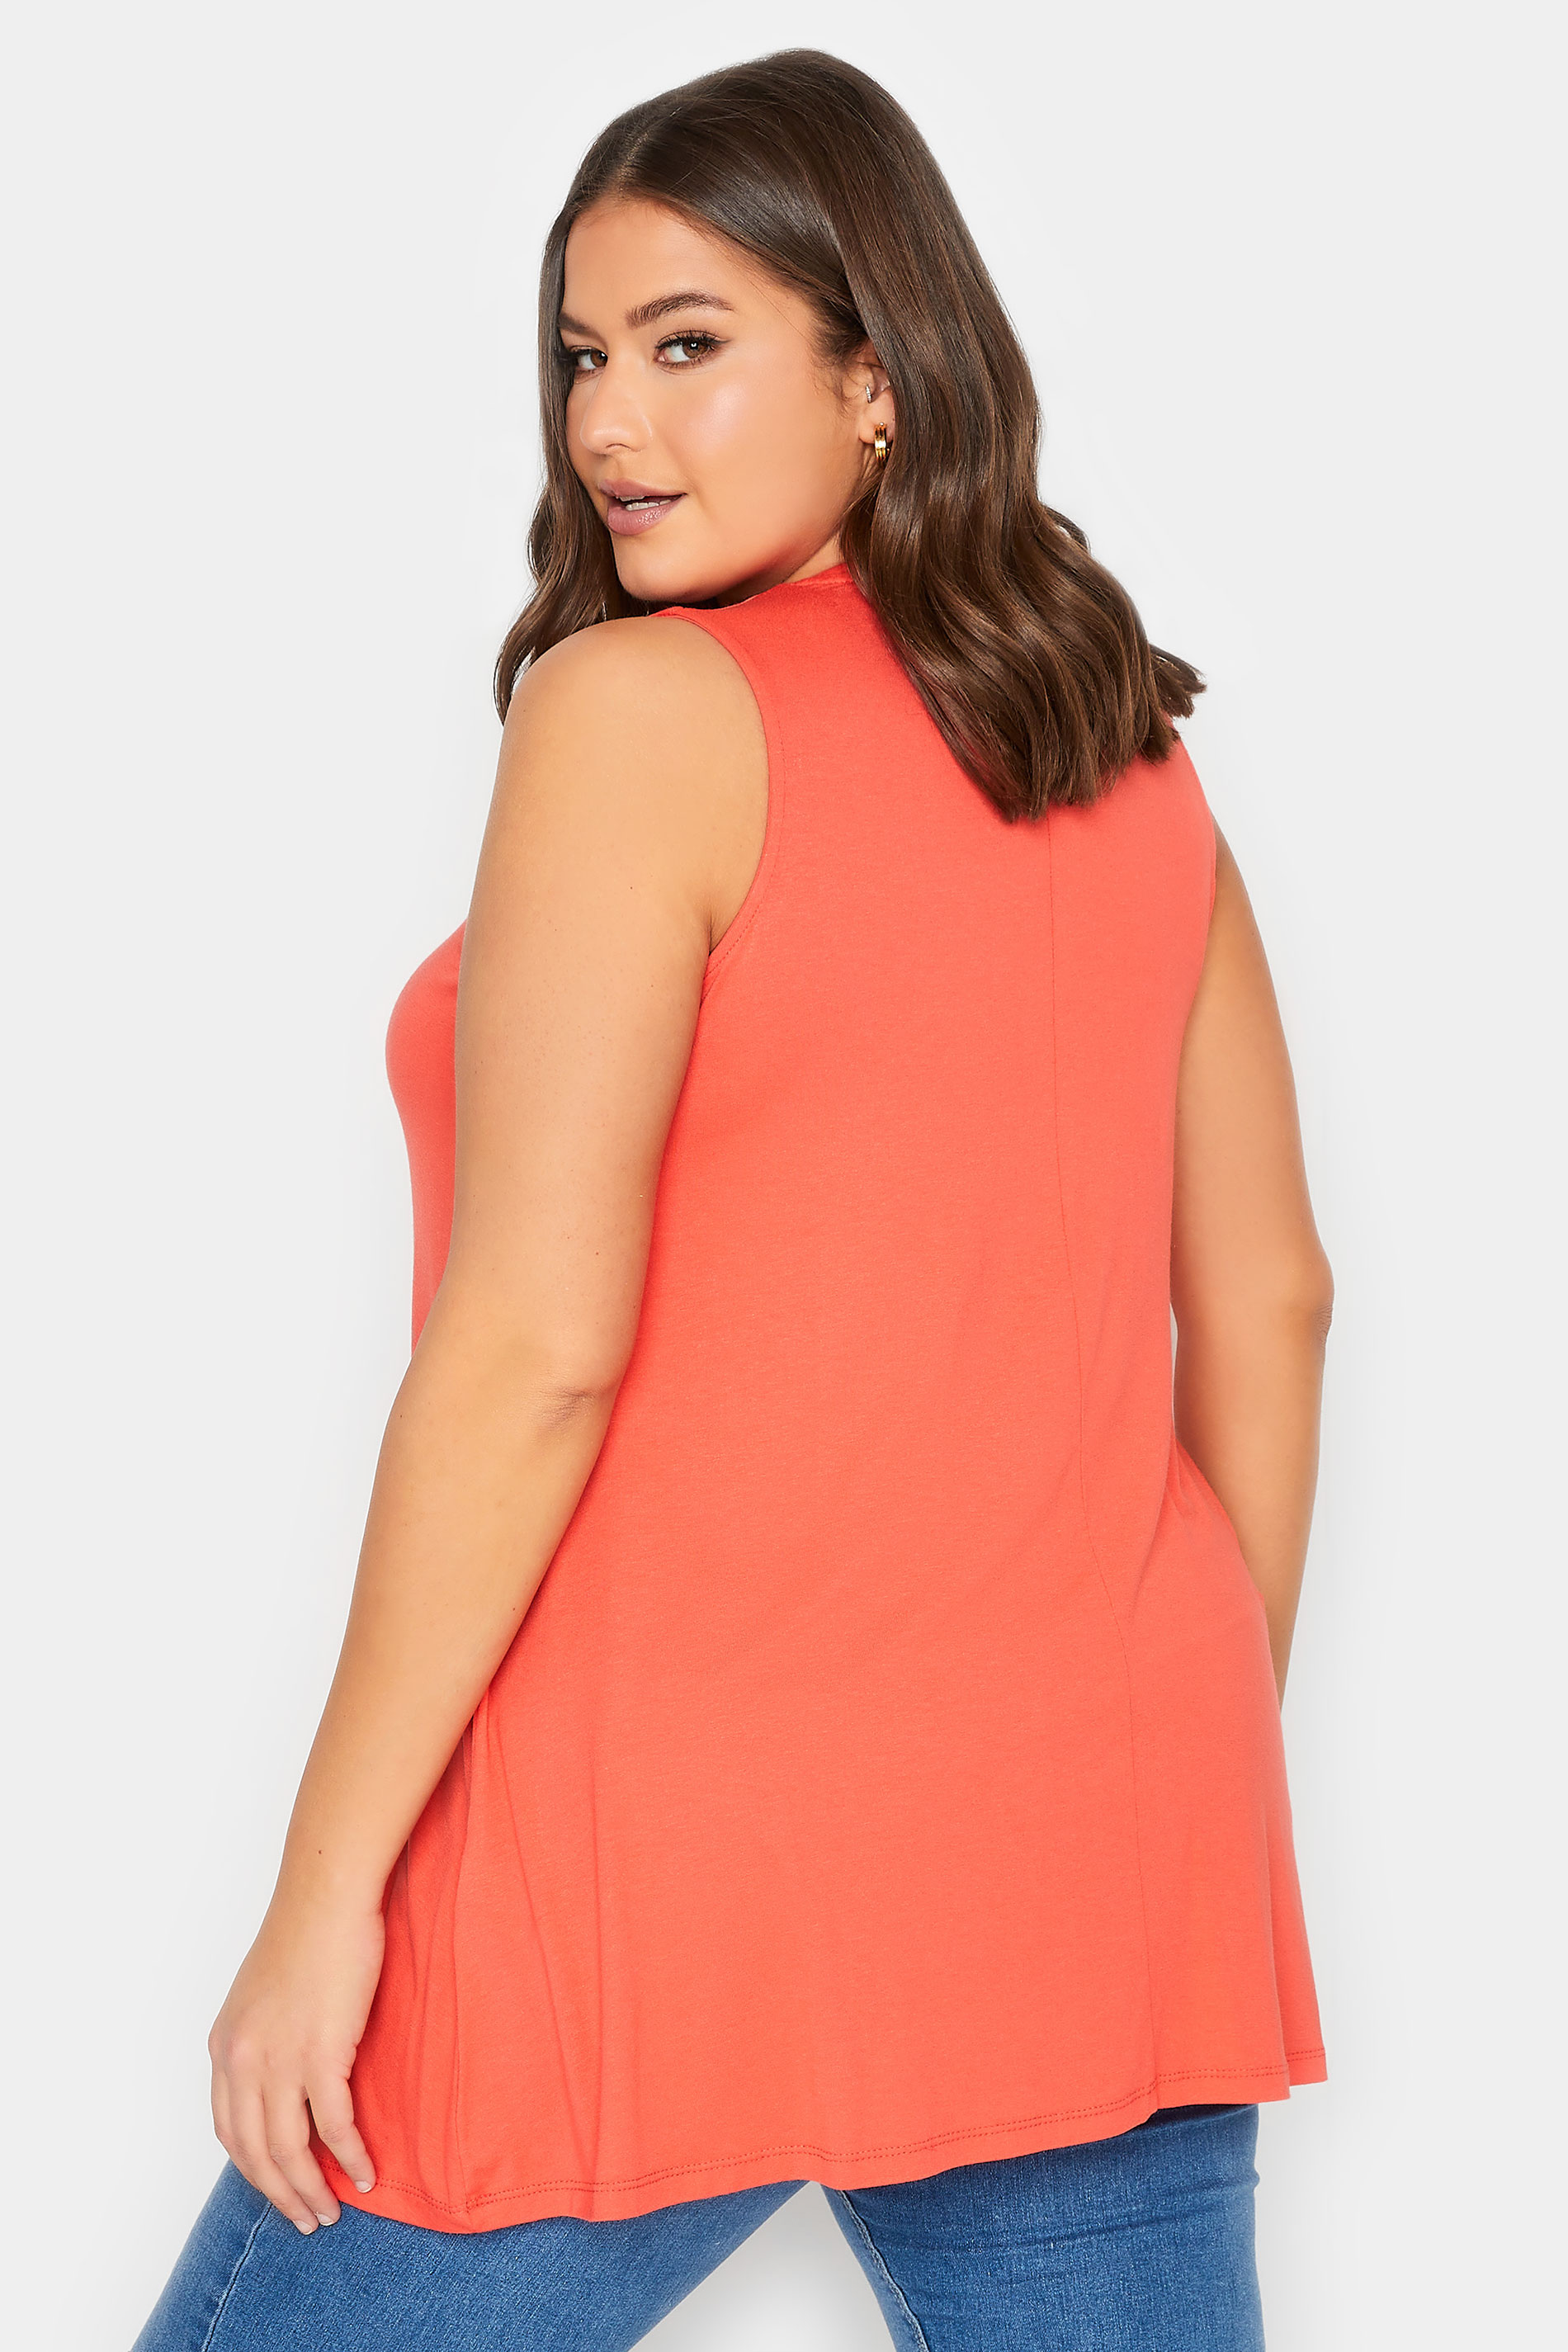 YOURS Curve Plus Size Orange Pleat Swing Vest Top | Yours Clothing  3